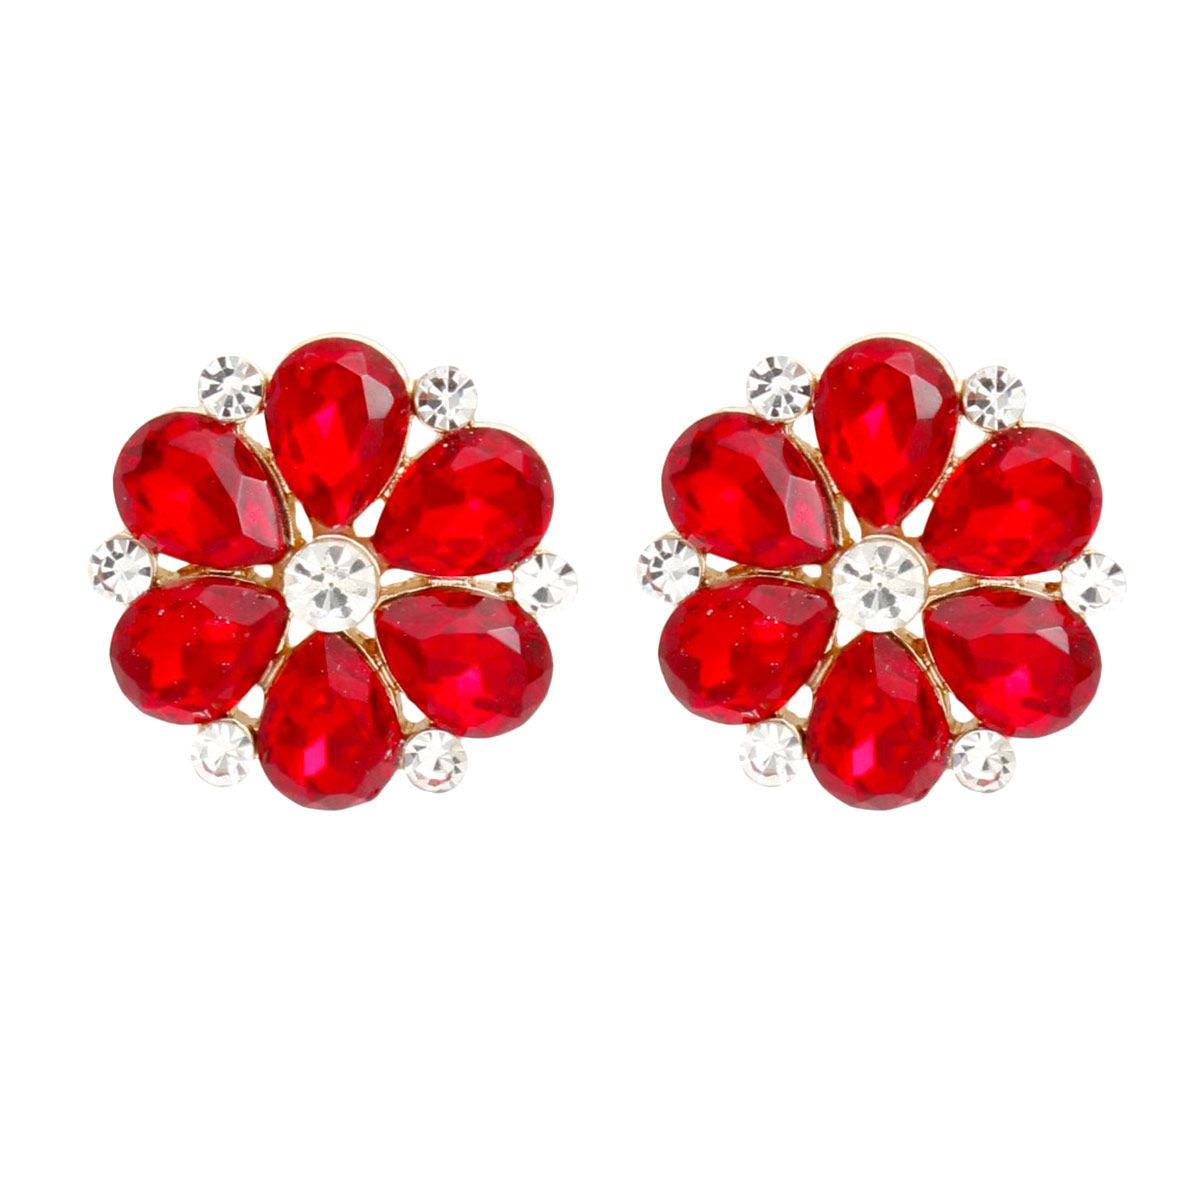 Red Cluster Flower Stud Earrings - Fashion Jewelry